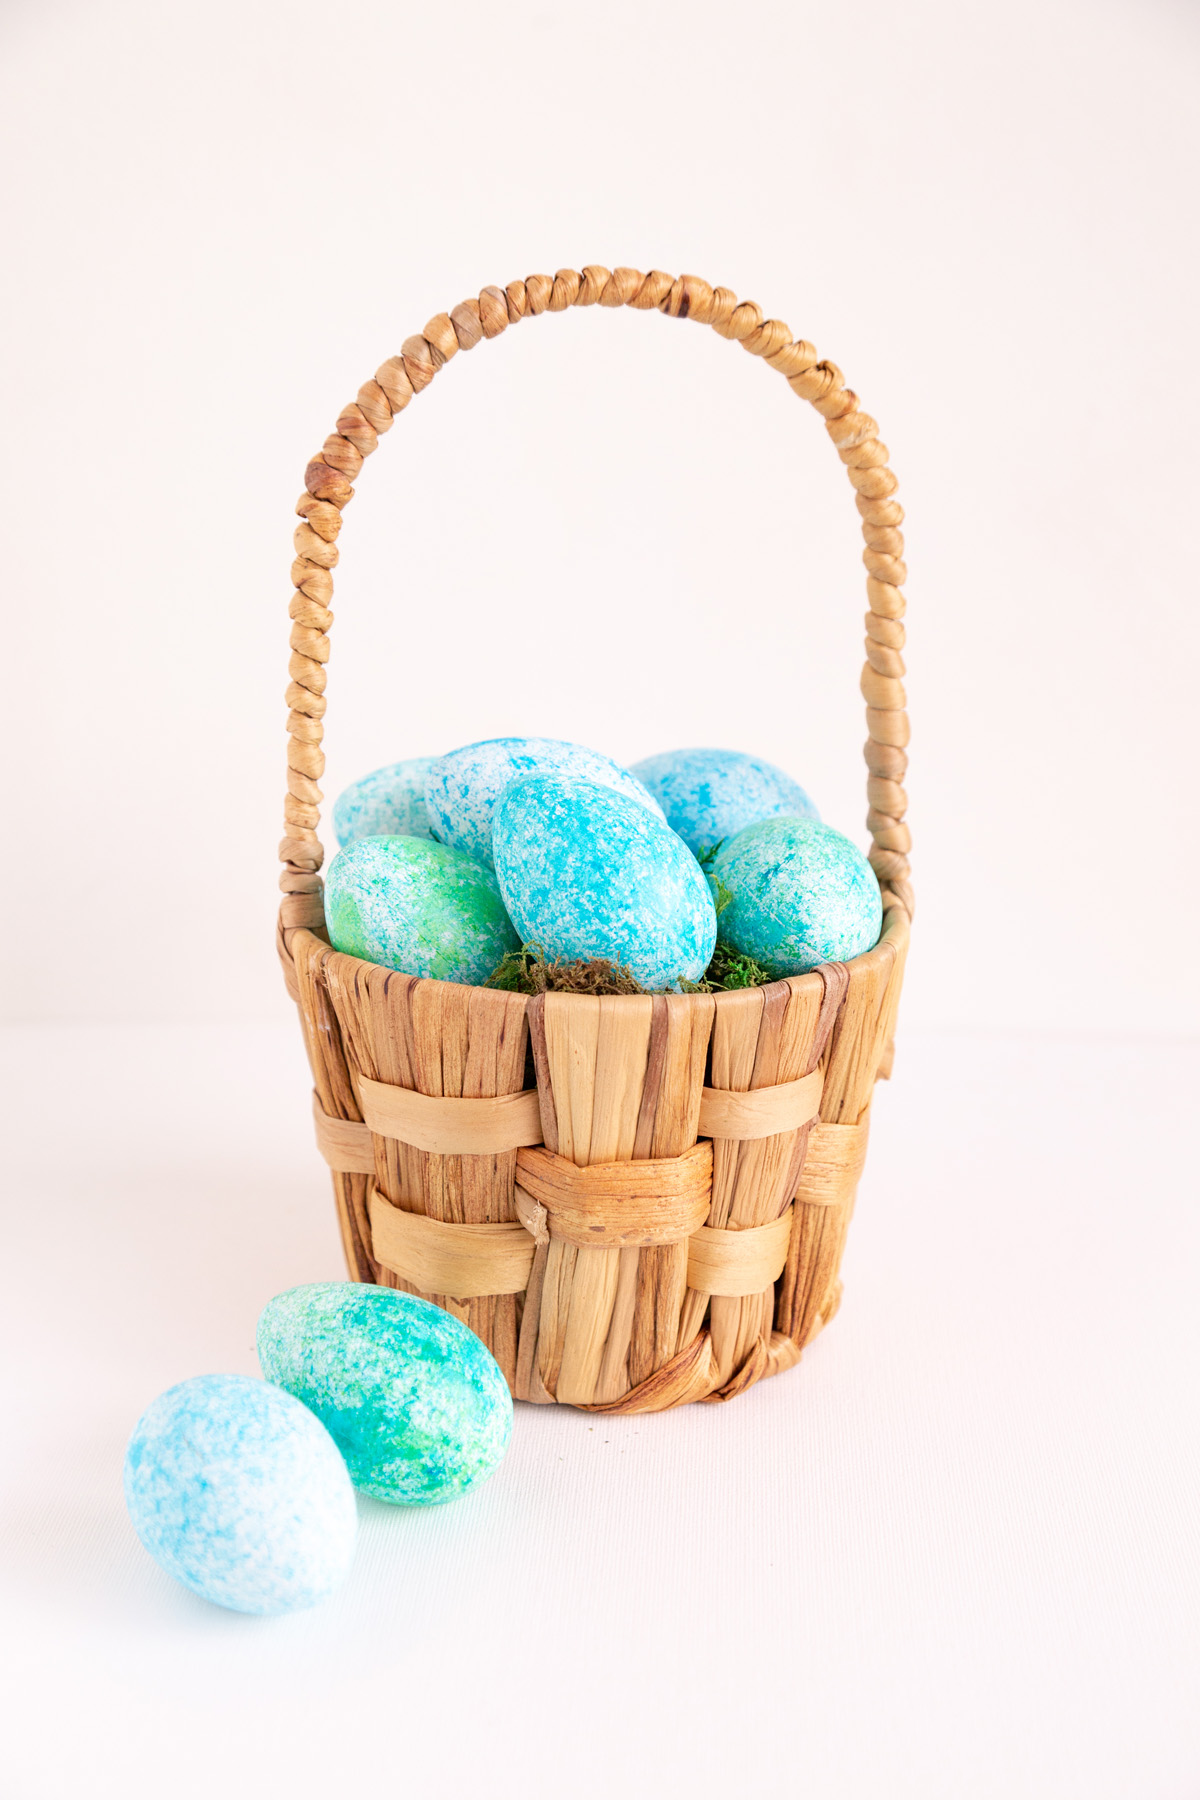 speckled eggs in basket